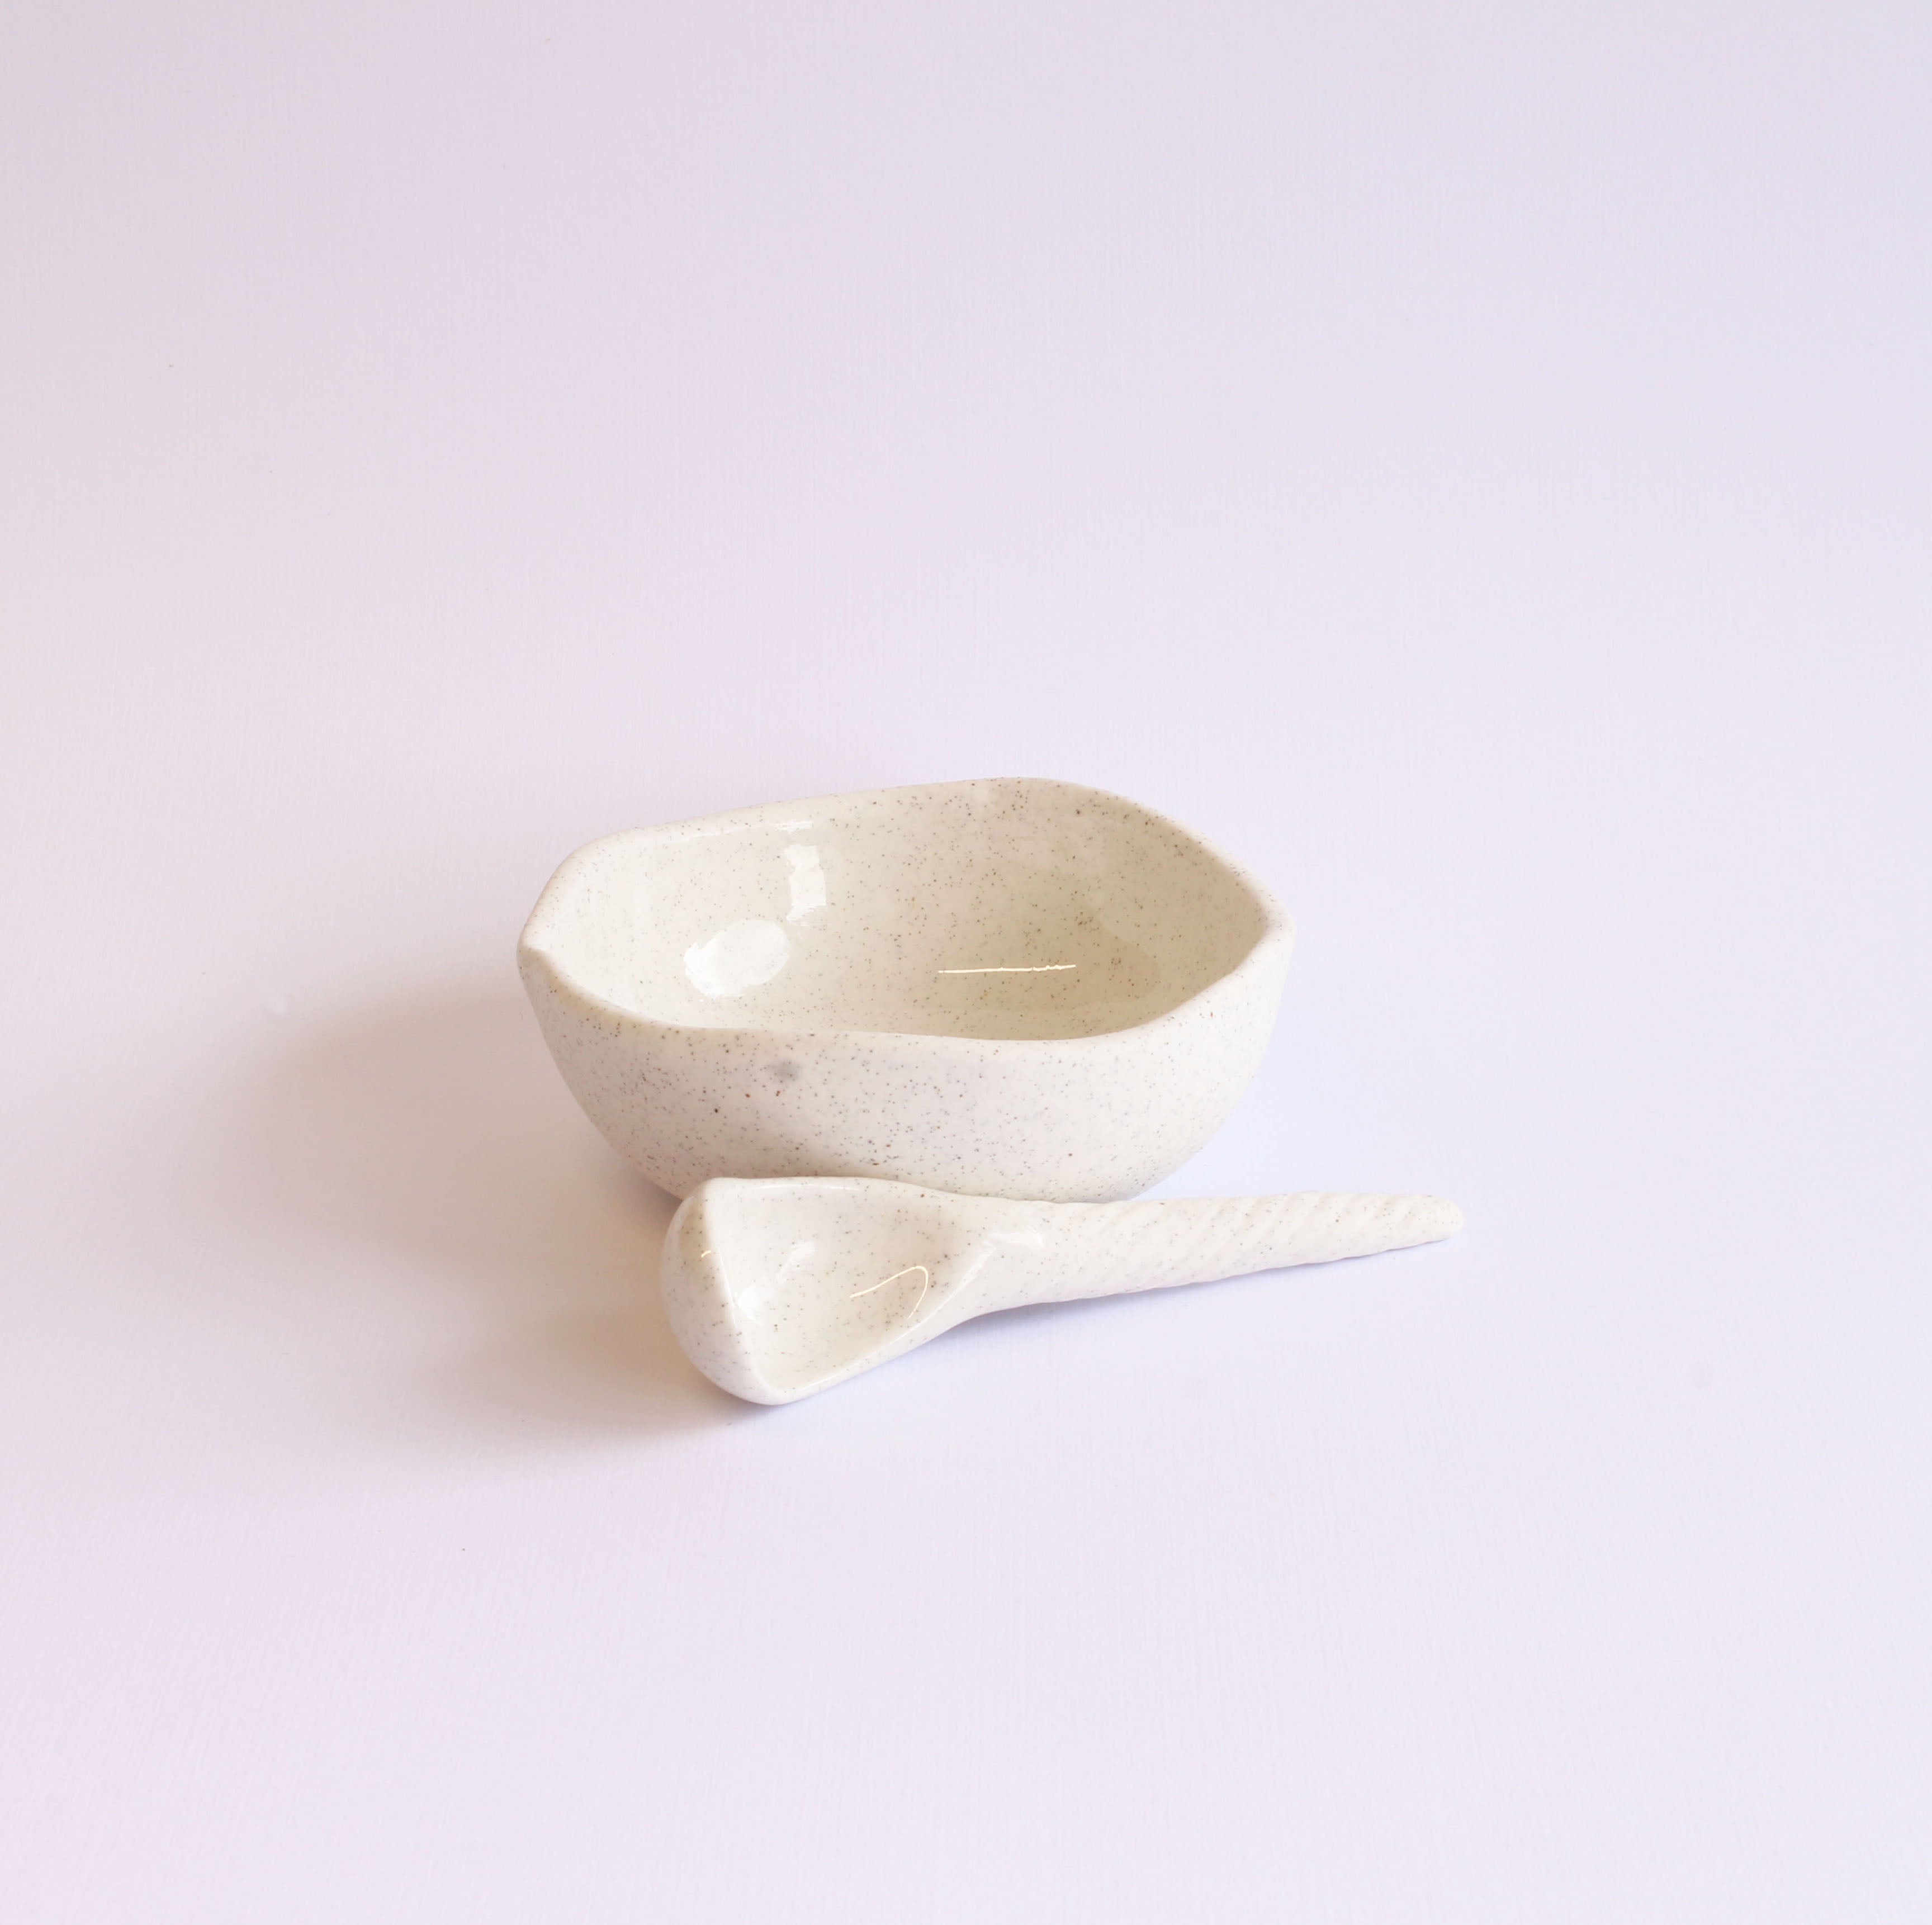 NZ Sand Salt / Sugar Bowl & Spoon Sets